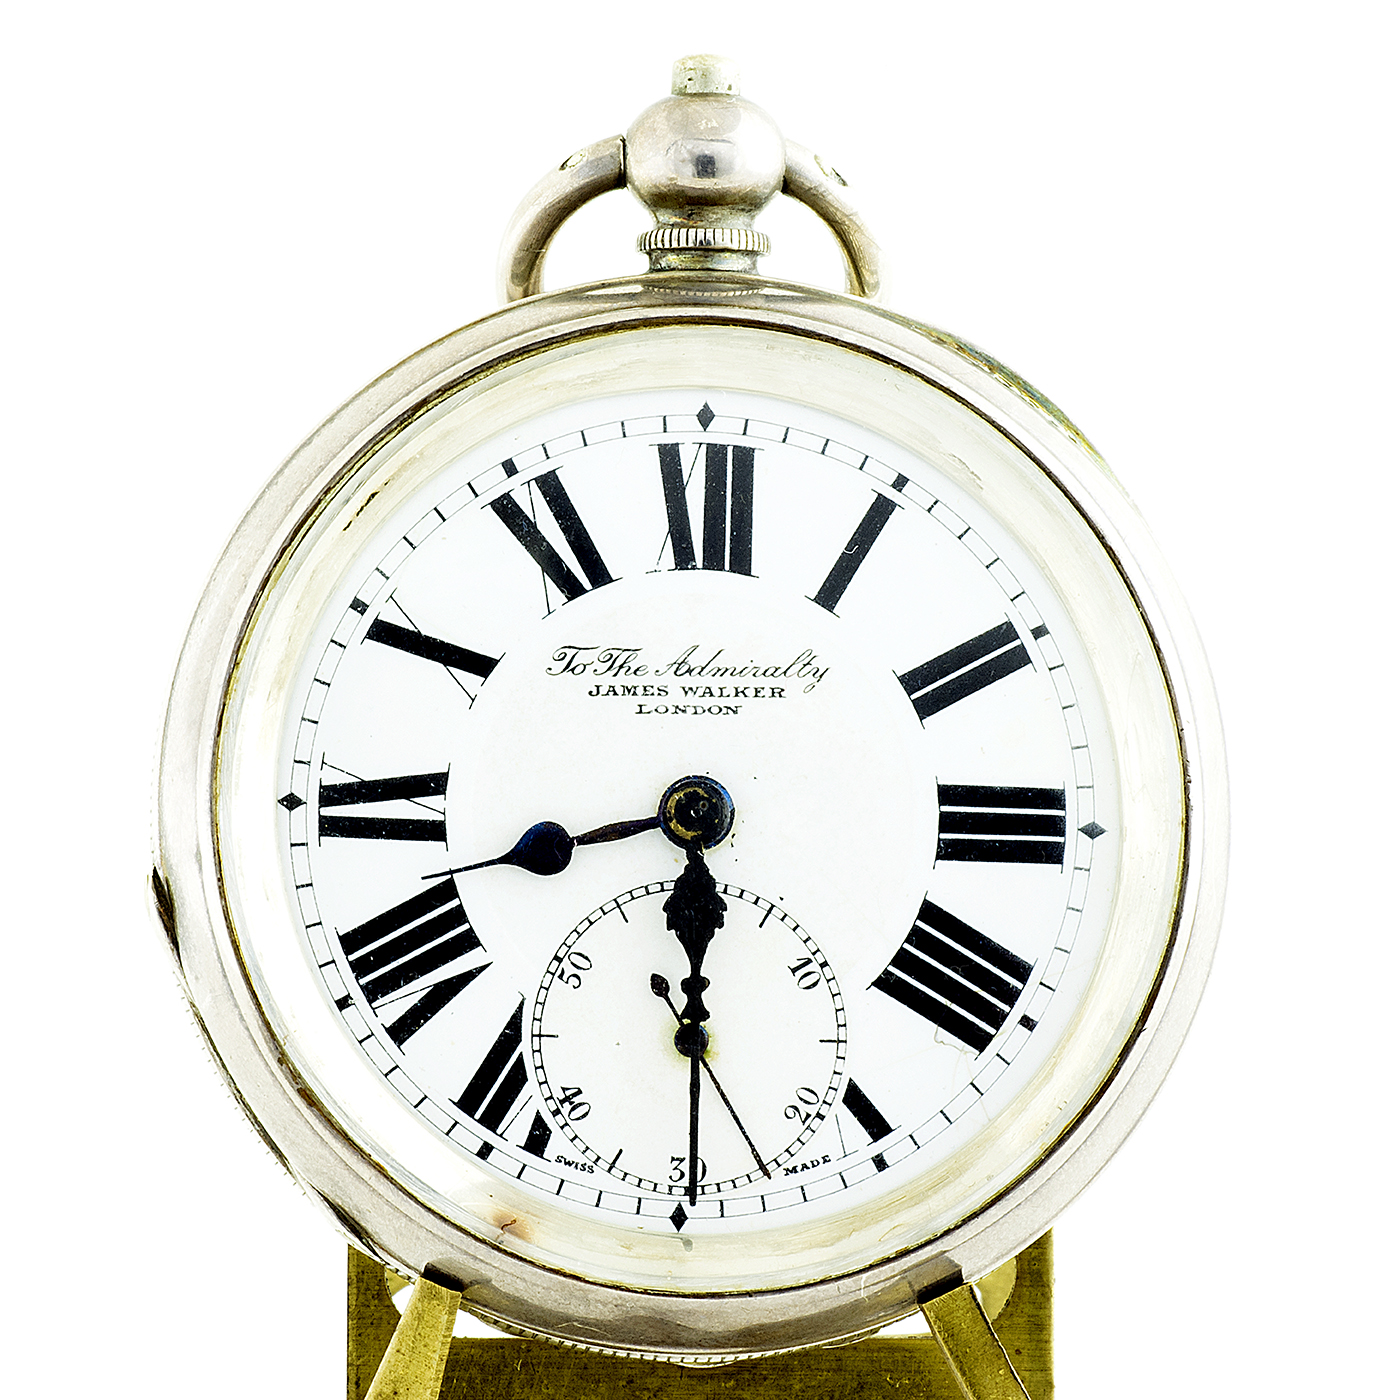 James Walker, Londres. Watchmaker to the Admiralty. Reloj de Bolsillo, lepine. Londres, 1922.